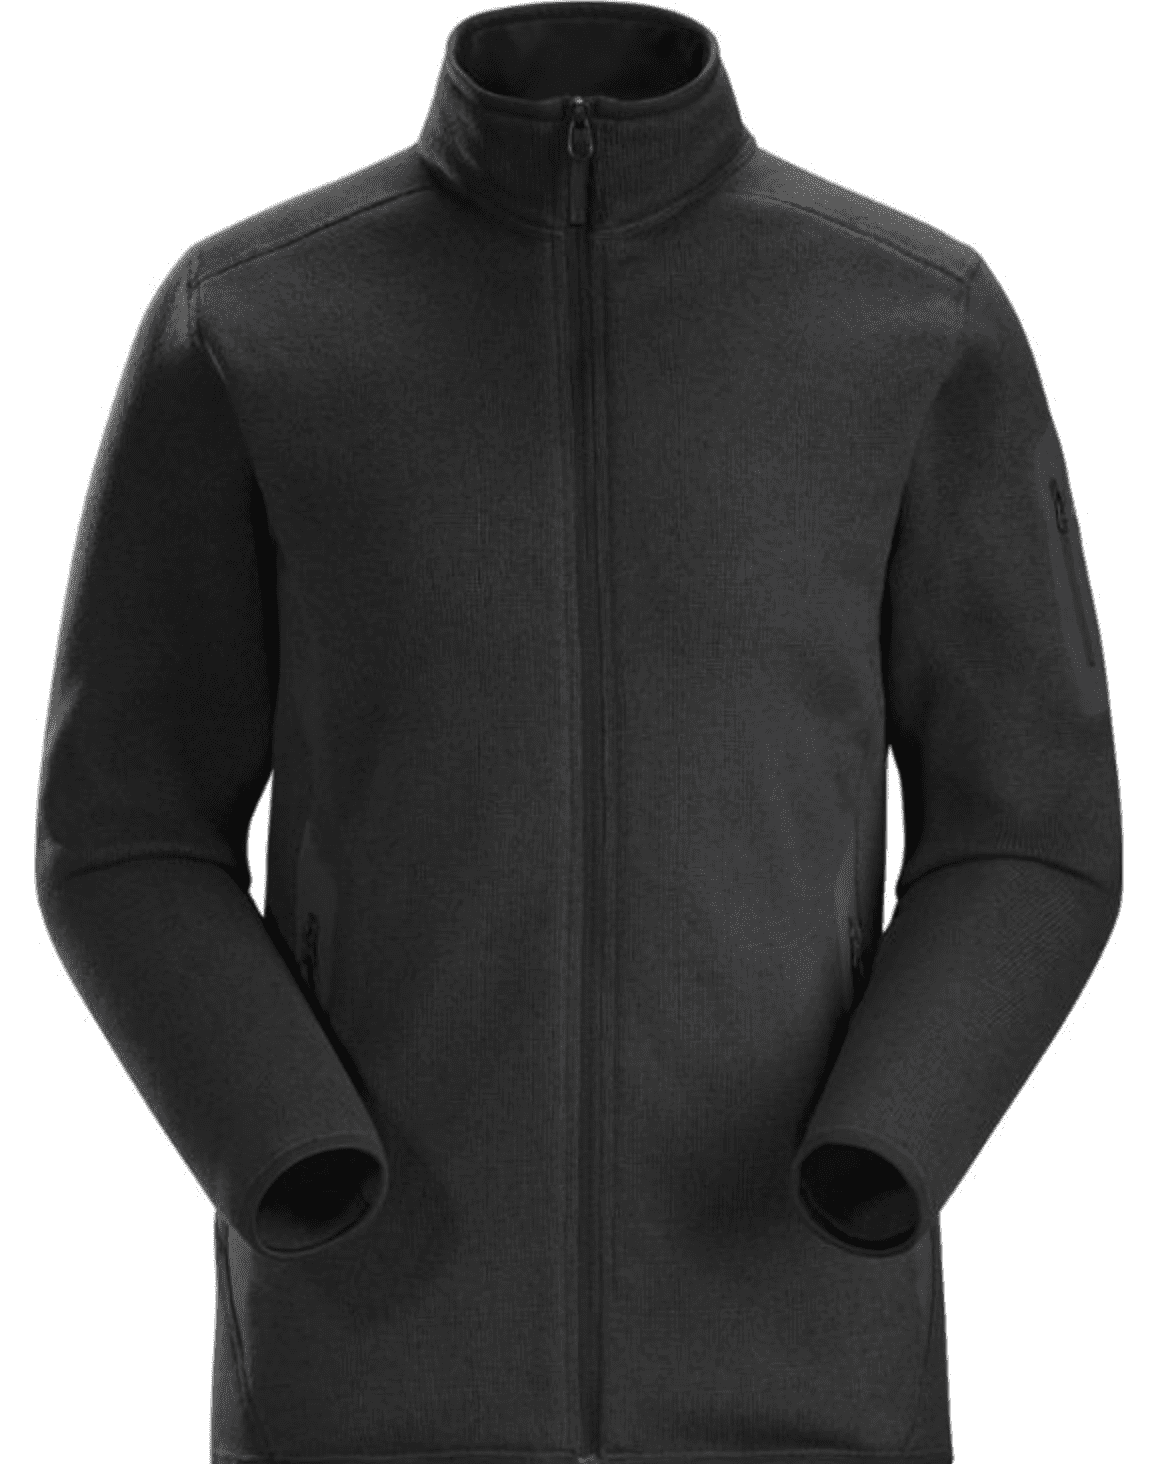 Arc'teryx Covert Cardigan Fleece Jacket